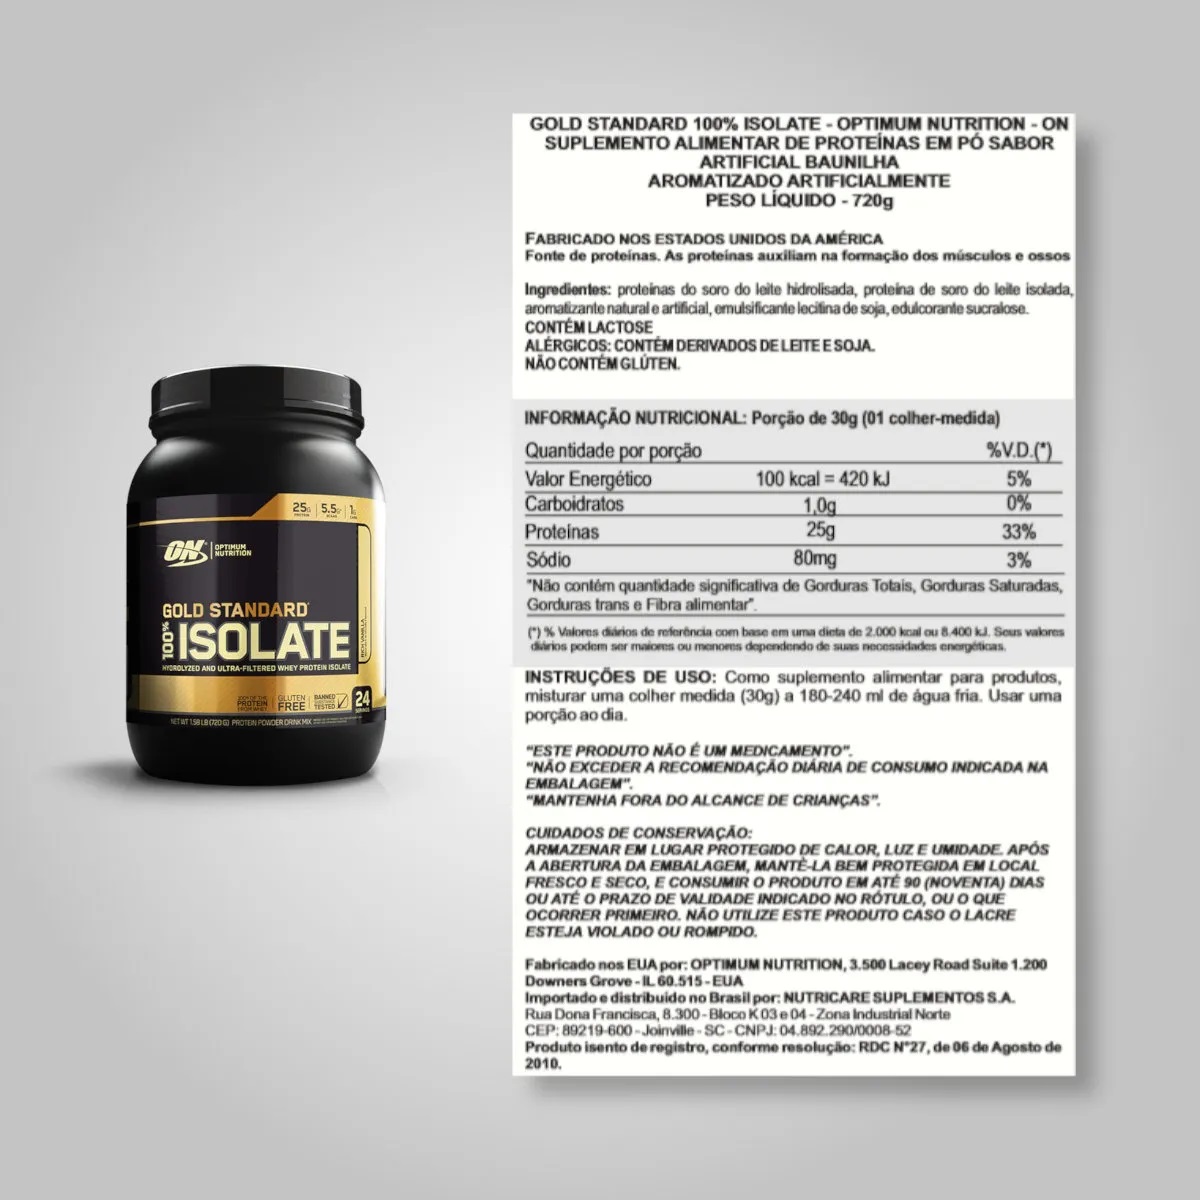 GOLD STANDARD 100% ISOLATE (720G) - OPTIMUM NUTRITION